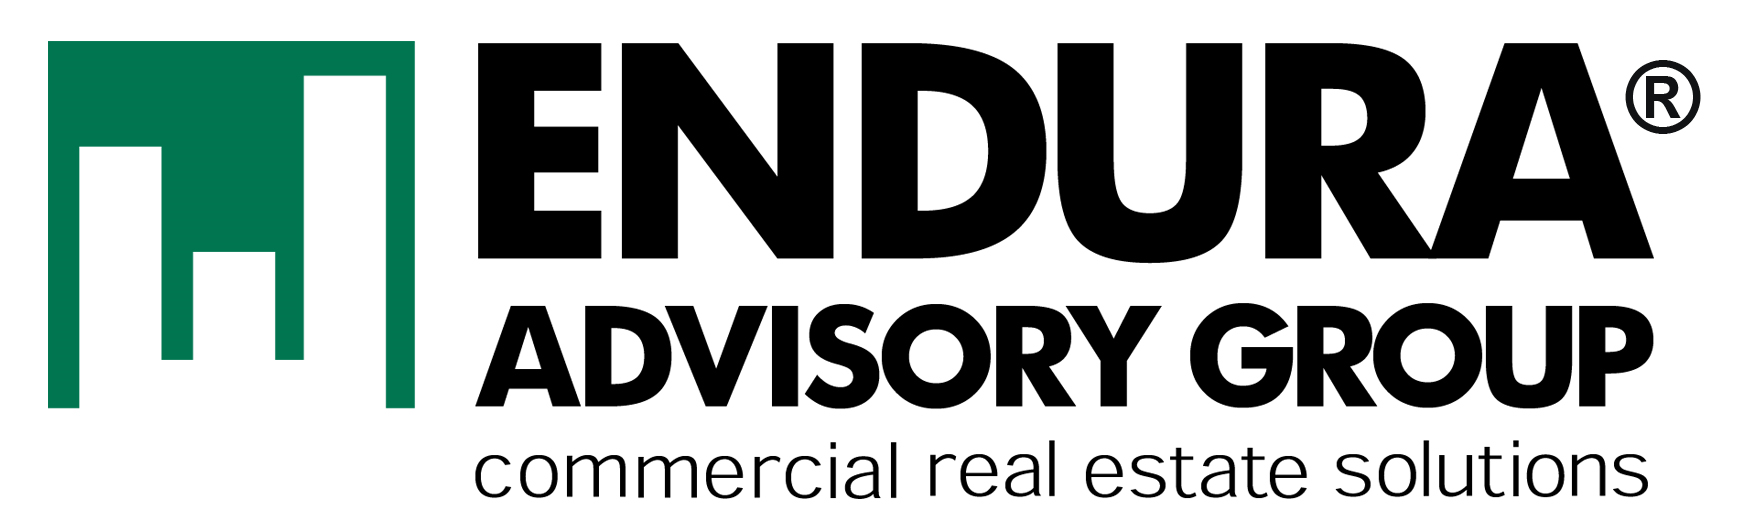 Endura Advisory Group logo